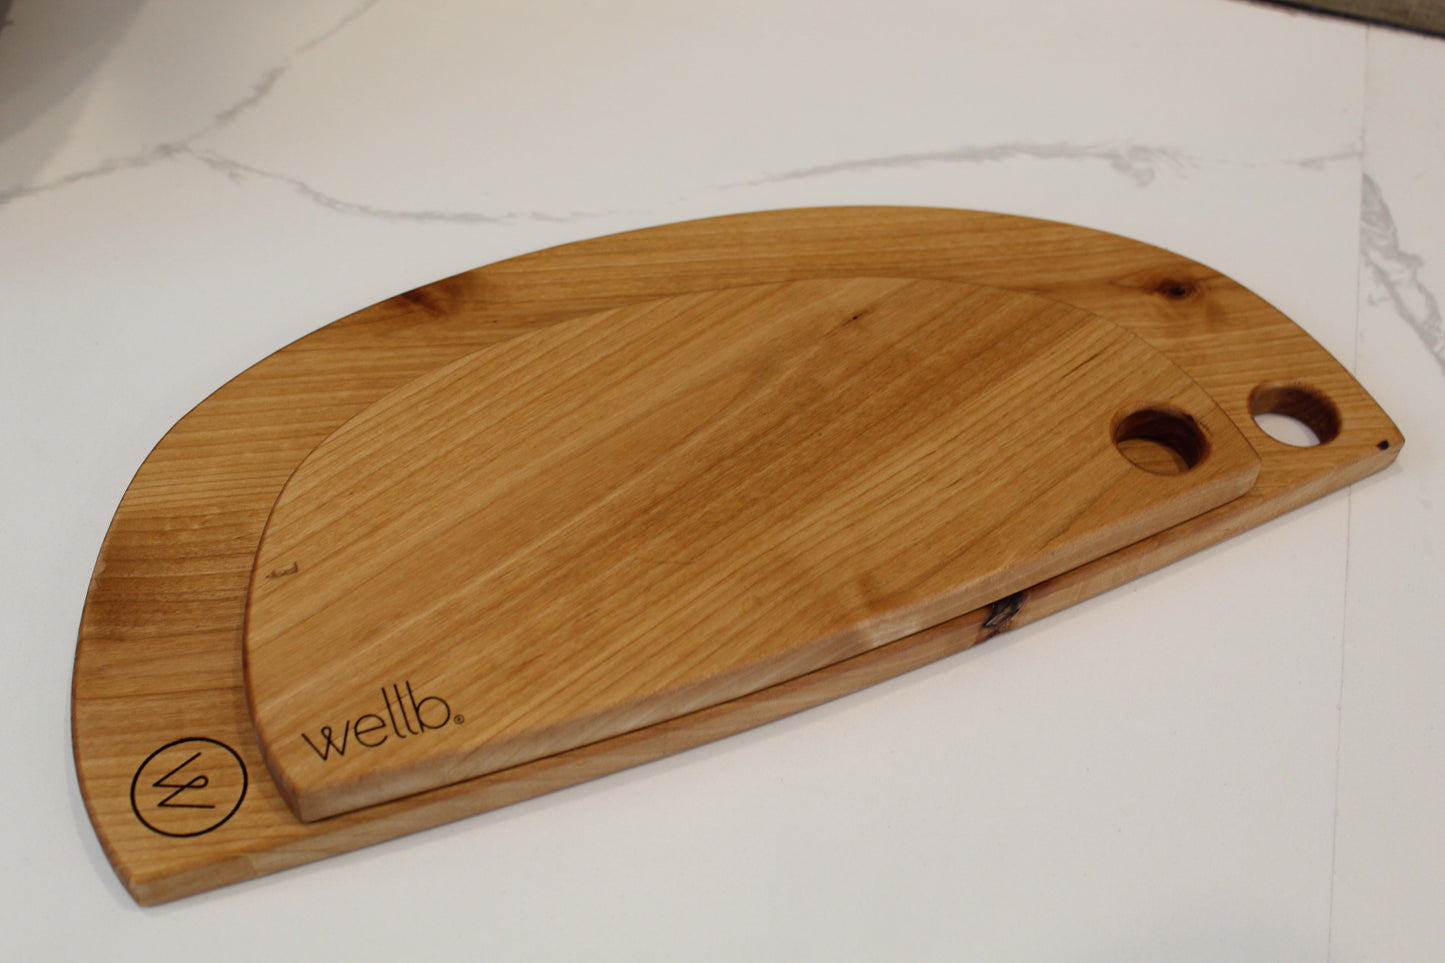 WELLB® Birdies Charcuterie Board (set of 2), serving board, walnut serving board, bird serving board